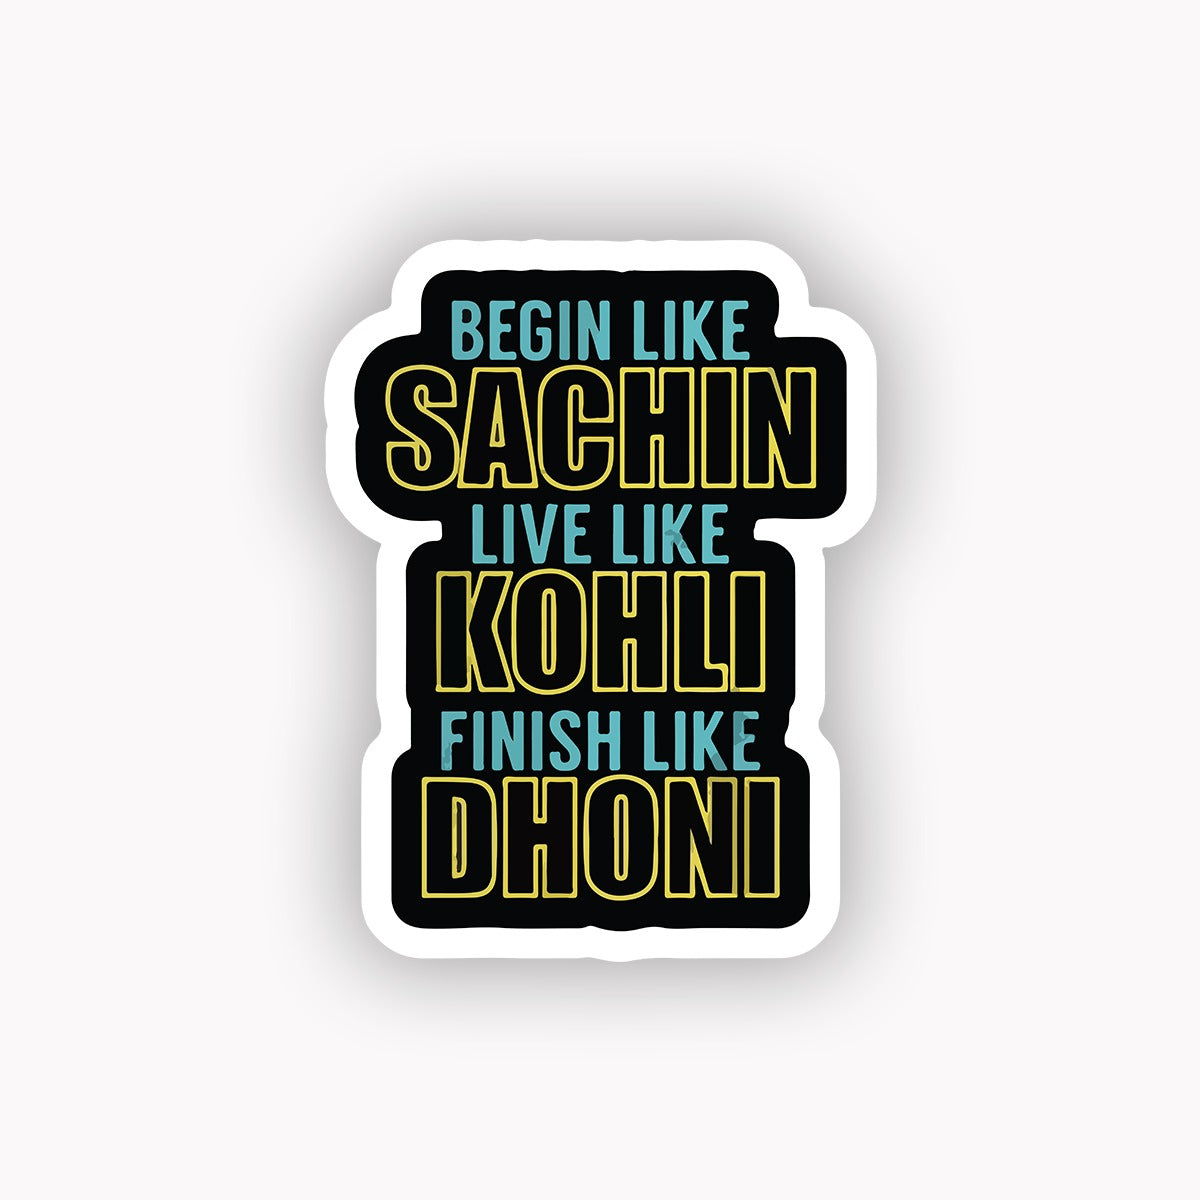 Begin like Sachin live like Kohli